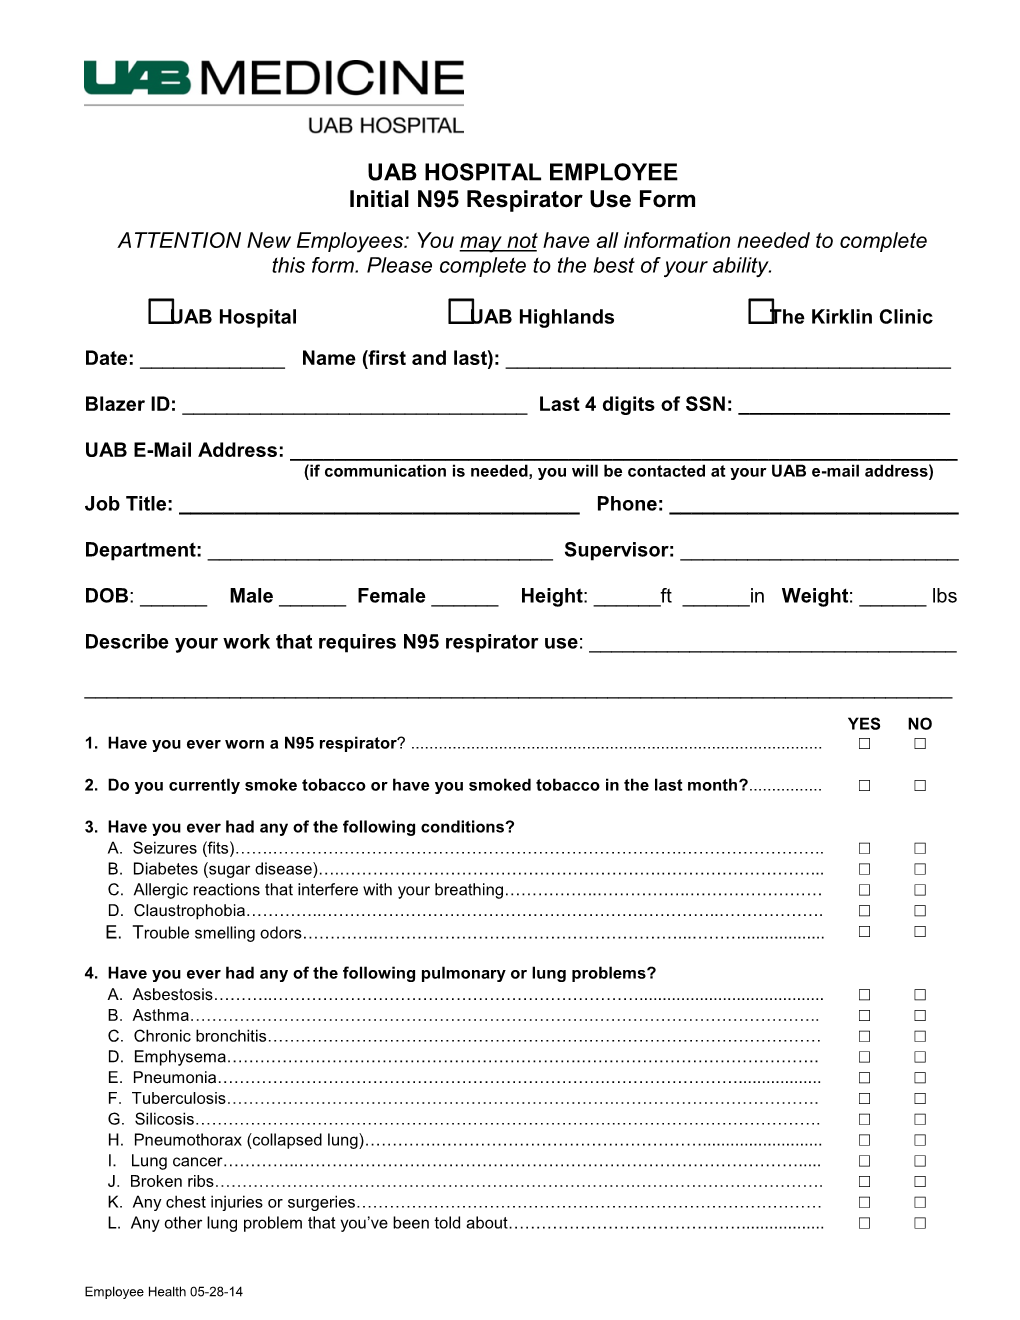 UAB HOSPITAL EMPLOYEE Initial N95 Respirator Use Form